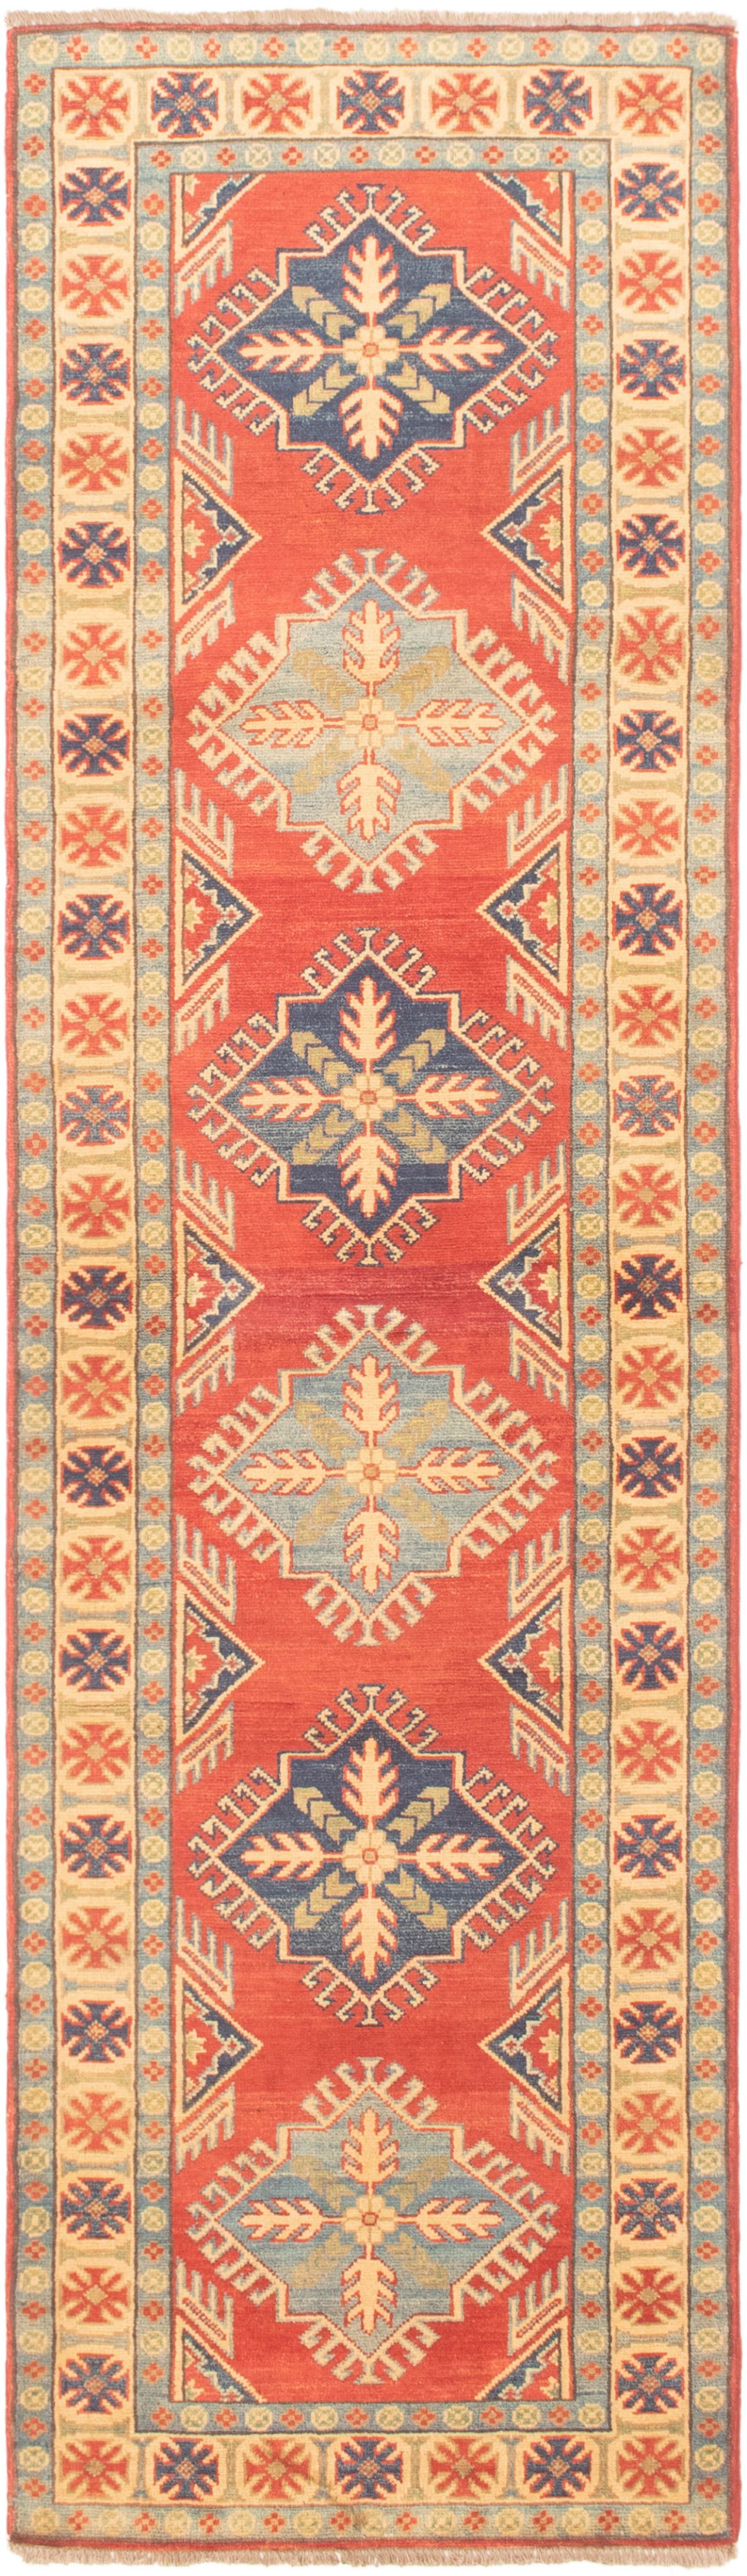 Hand-knotted Finest Gazni Dark Copper Wool Rug 2'8" x 9'5" Size: 2'8" x 9'5"  